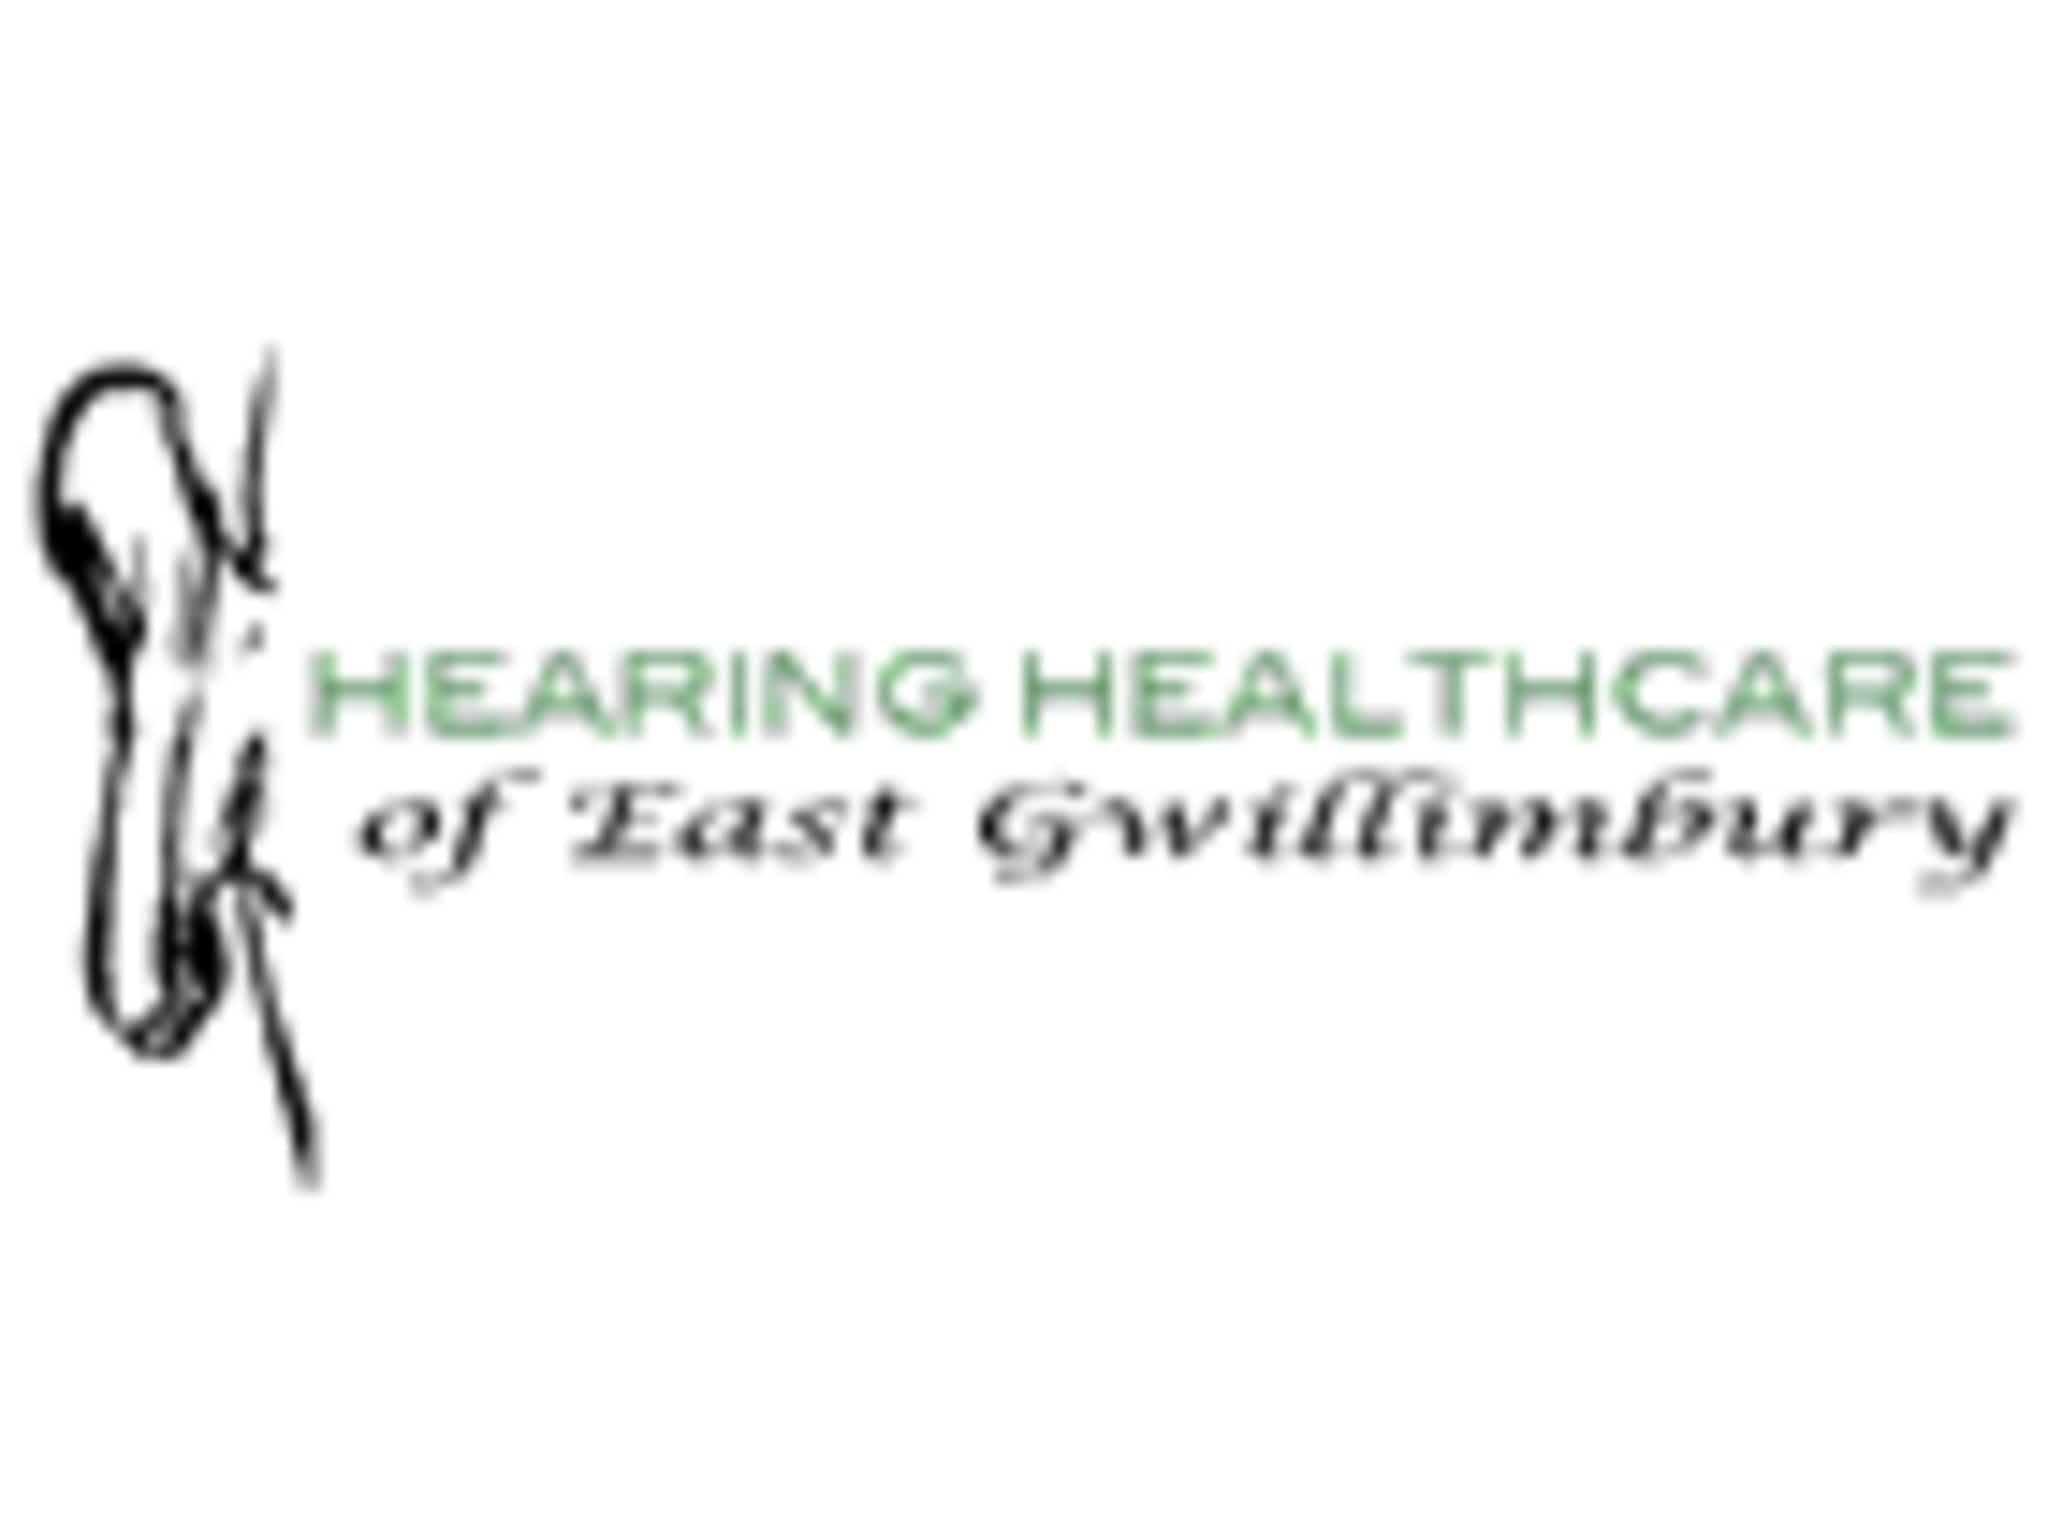 photo Hearing Healthcare Of East Gwillimbury